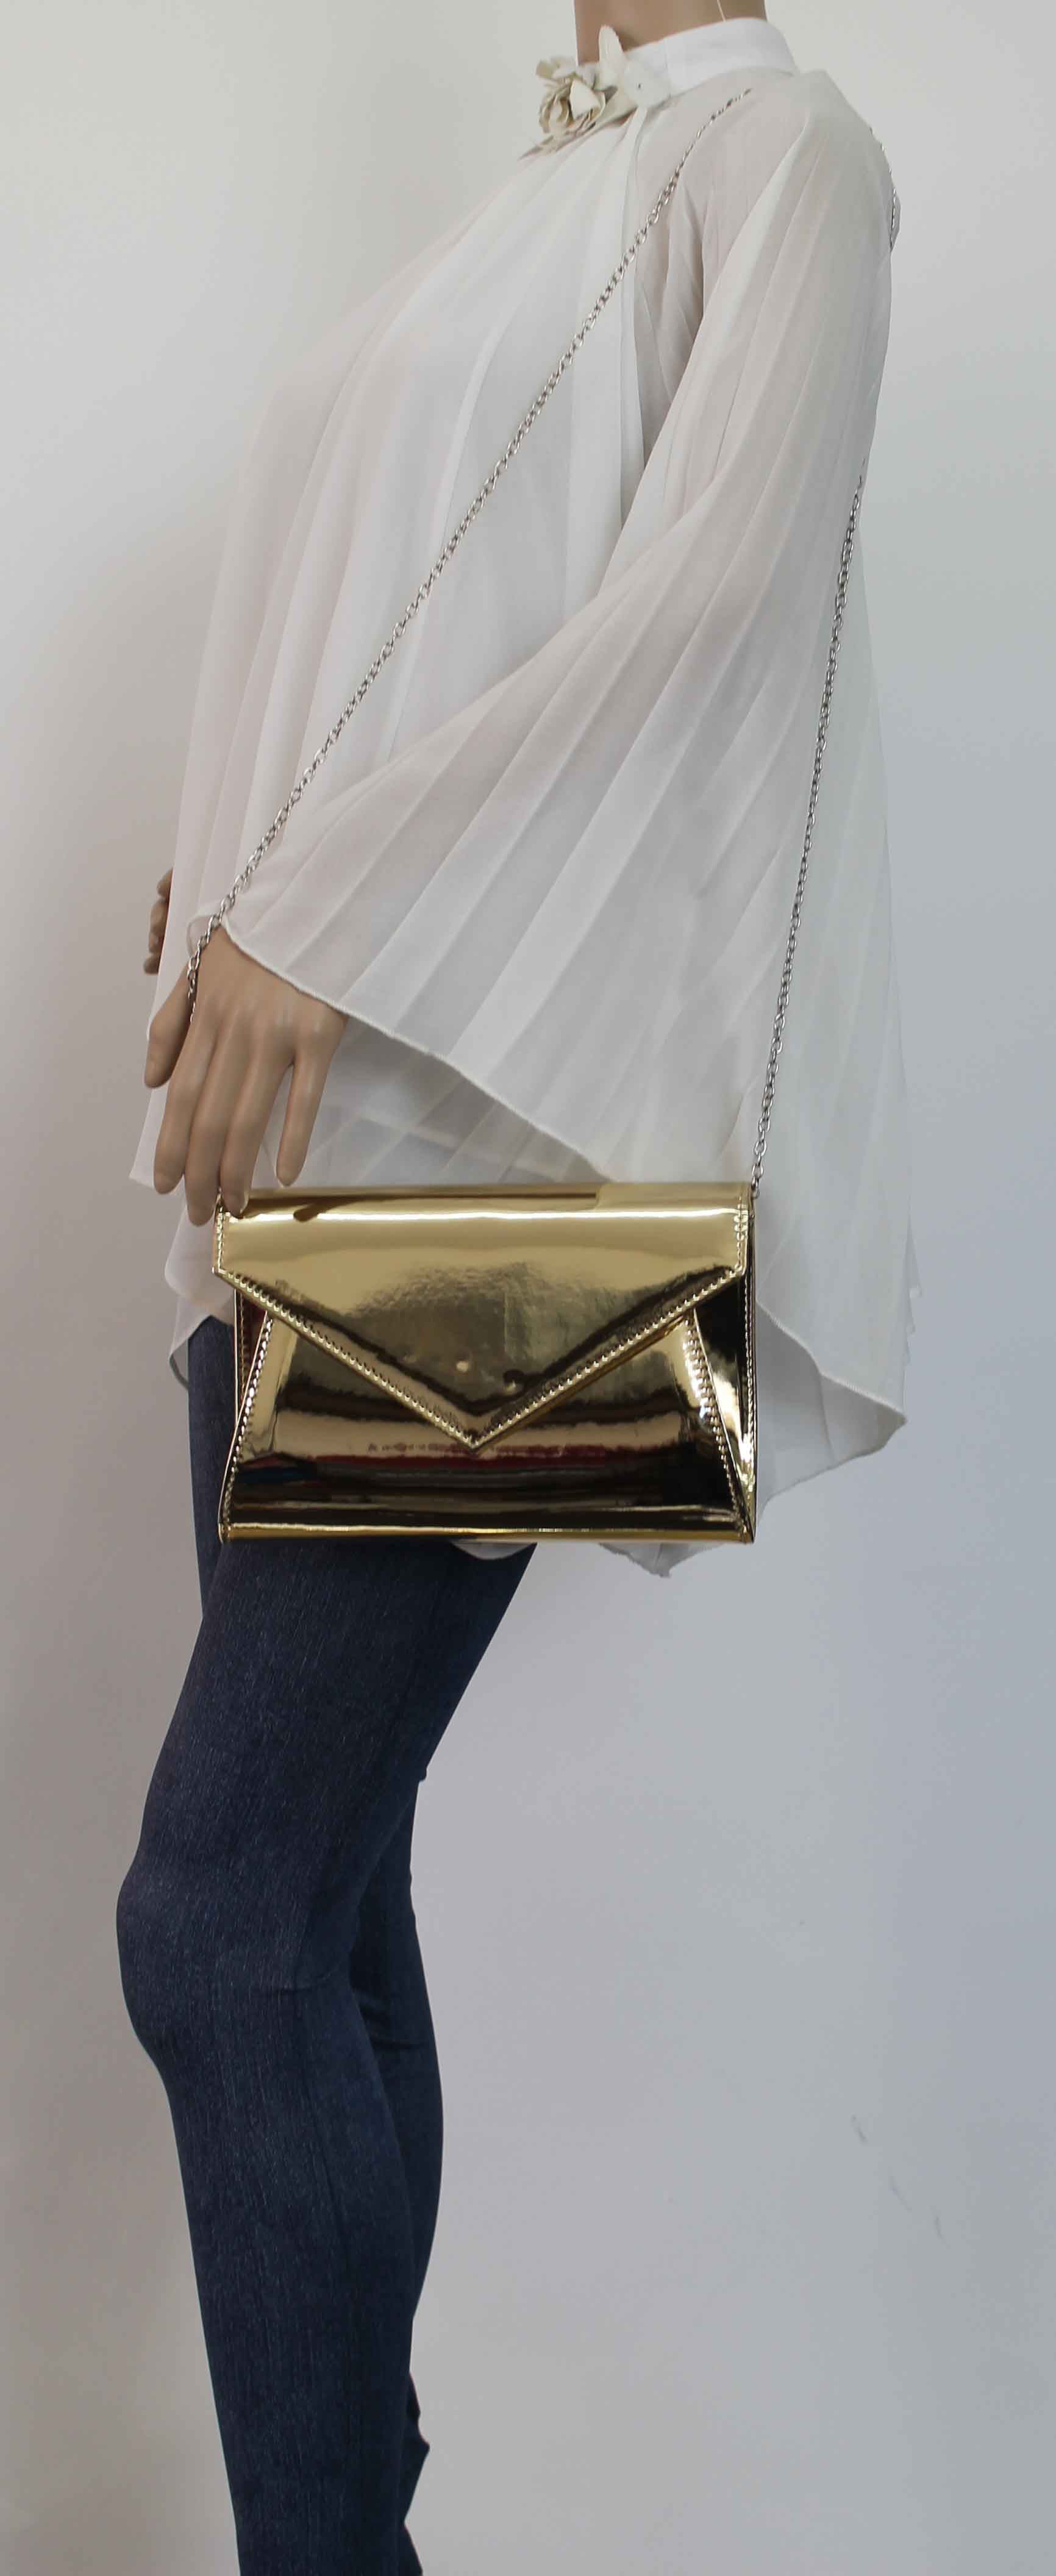 SWANKYSWANS Lenny Shiny Clutch Bag Gold Cute Cheap Clutch Bag For Weddings School and Work